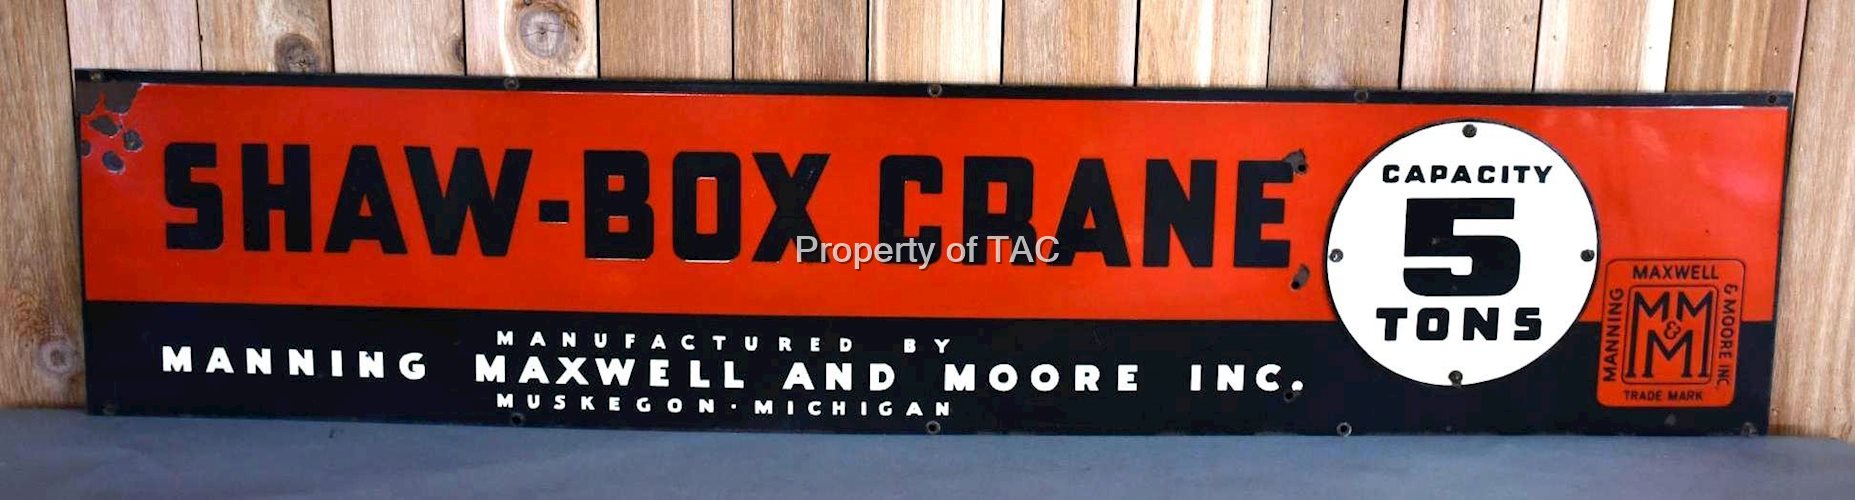 Shaw-Box Crane MM&M 5 Ton Porcelain Sign